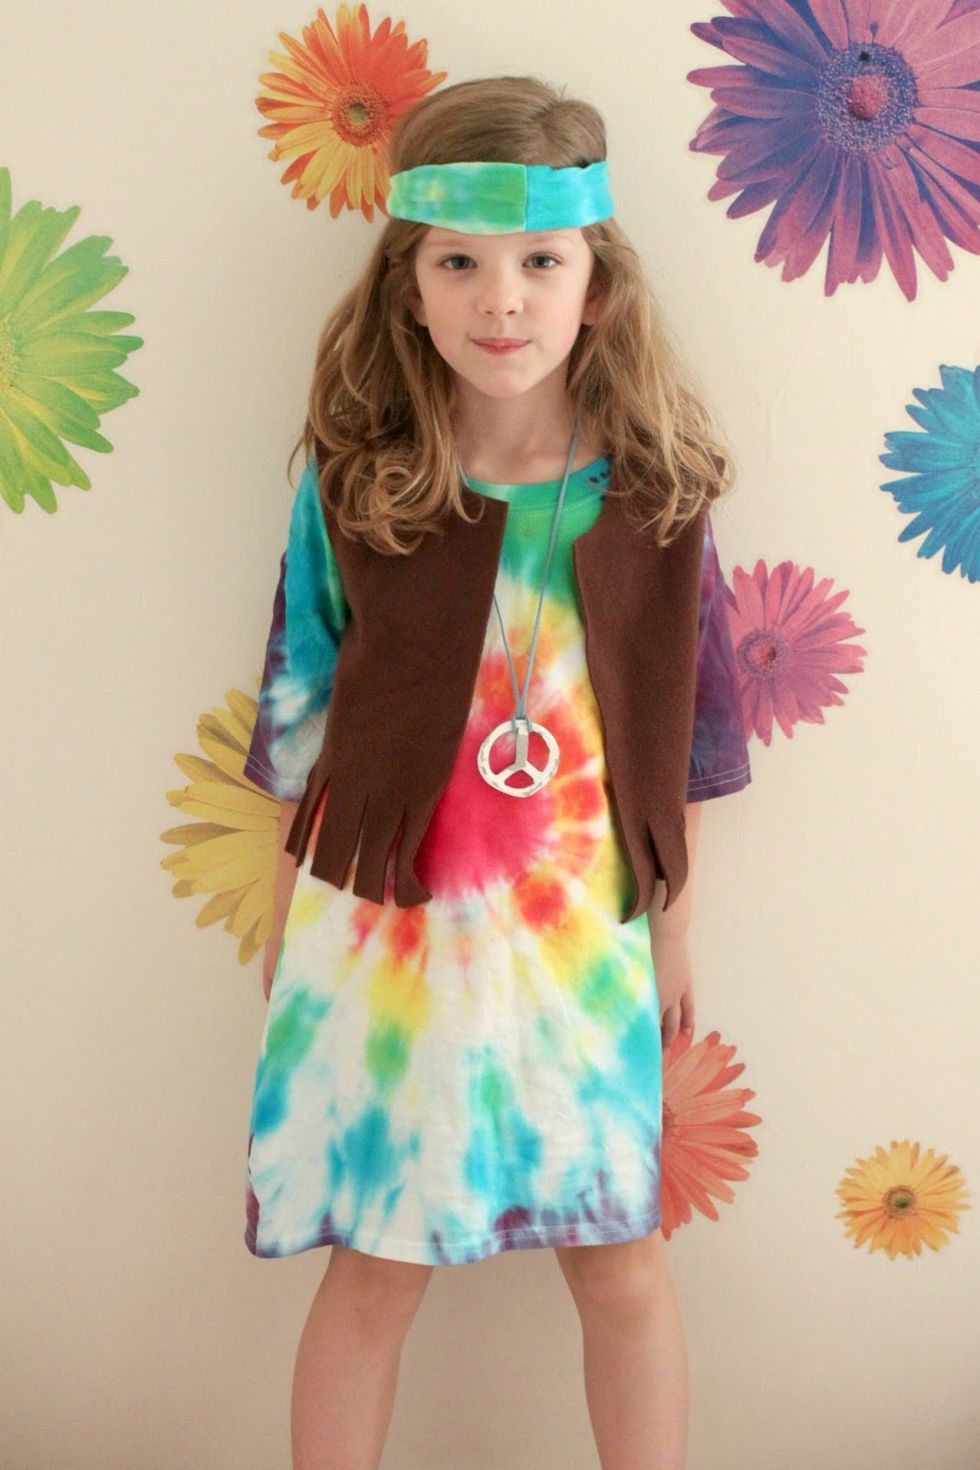 How to DIY Hippie Costume 15+ Ideas - Lana Mango